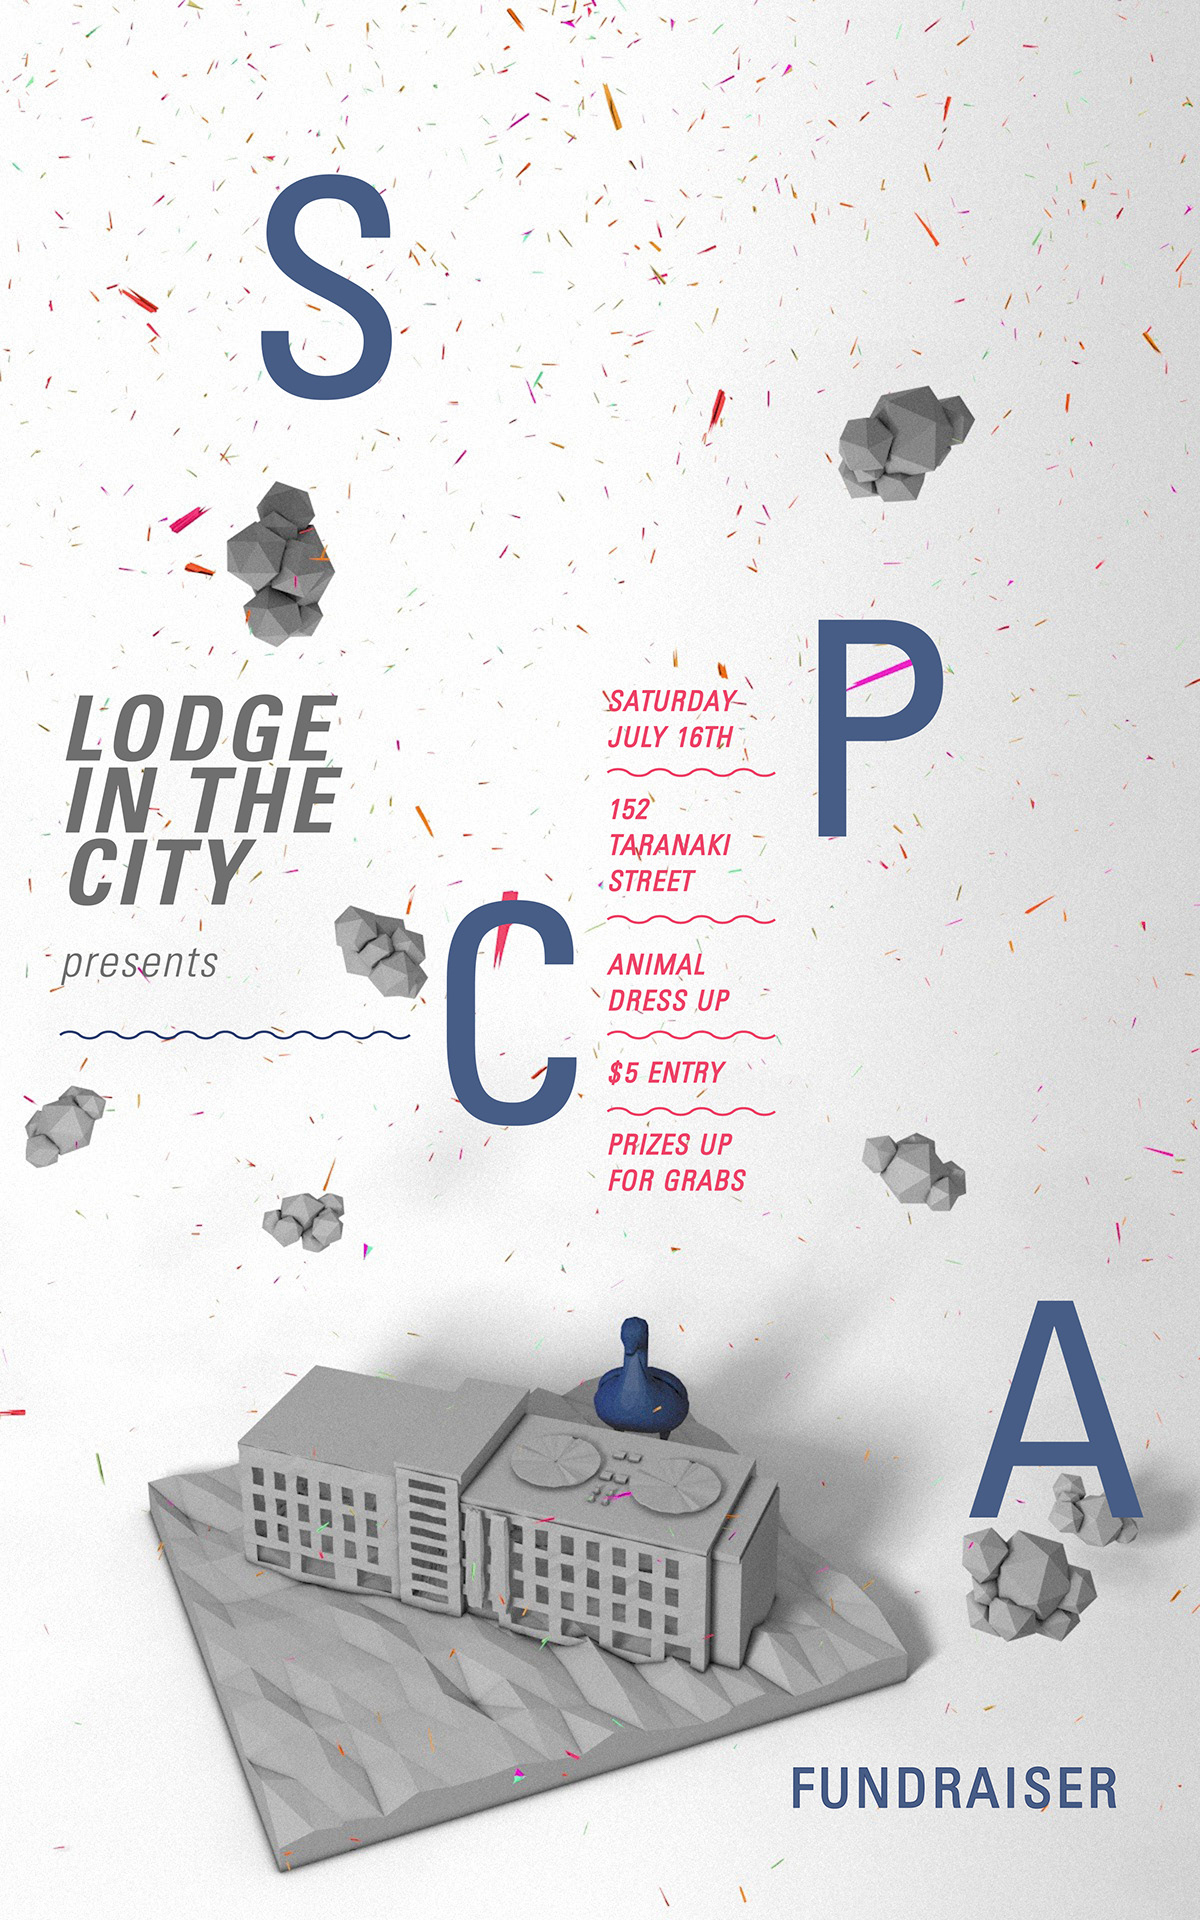 SPCA cinema 4d collage fundraiser confetti minimal